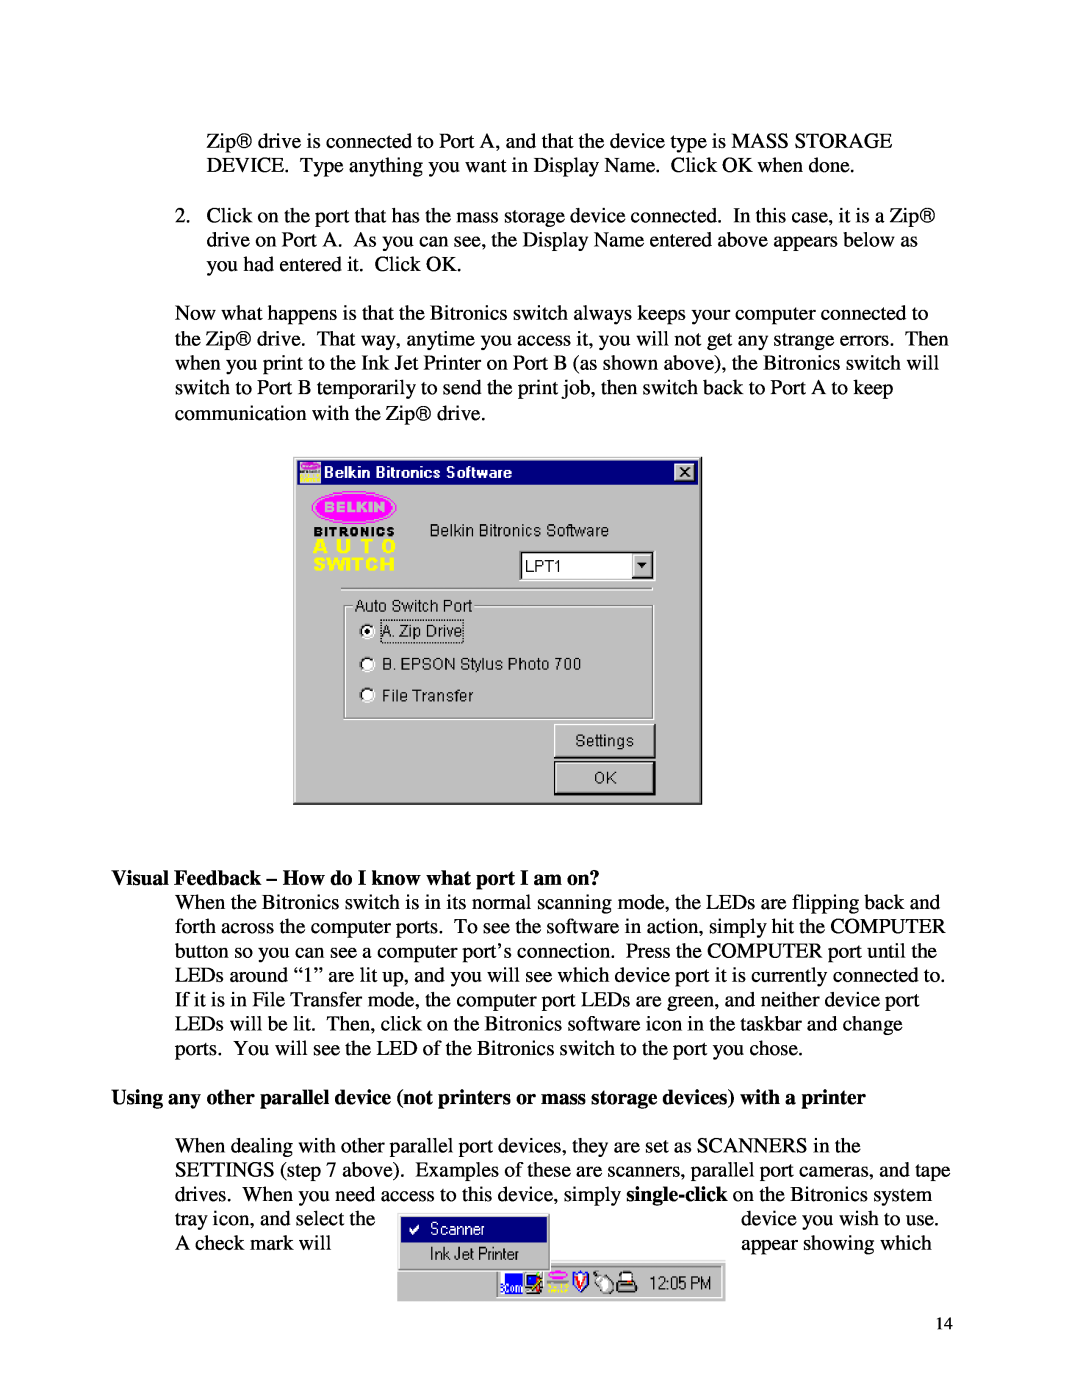 Belkin WINDOWS NT/2k/XP manual Visual Feedback - How do I know what port I am on? 